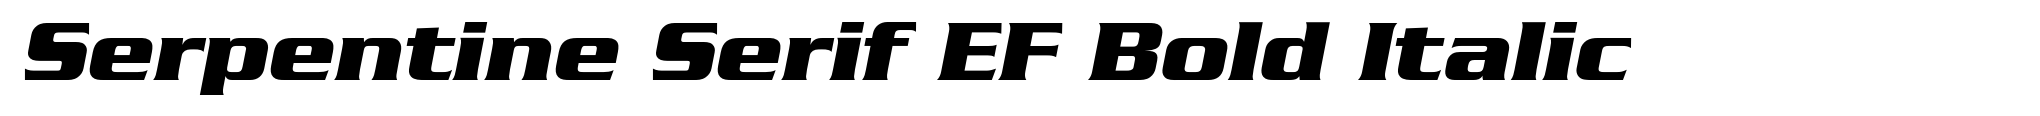 Serpentine Serif EF Bold Italic image